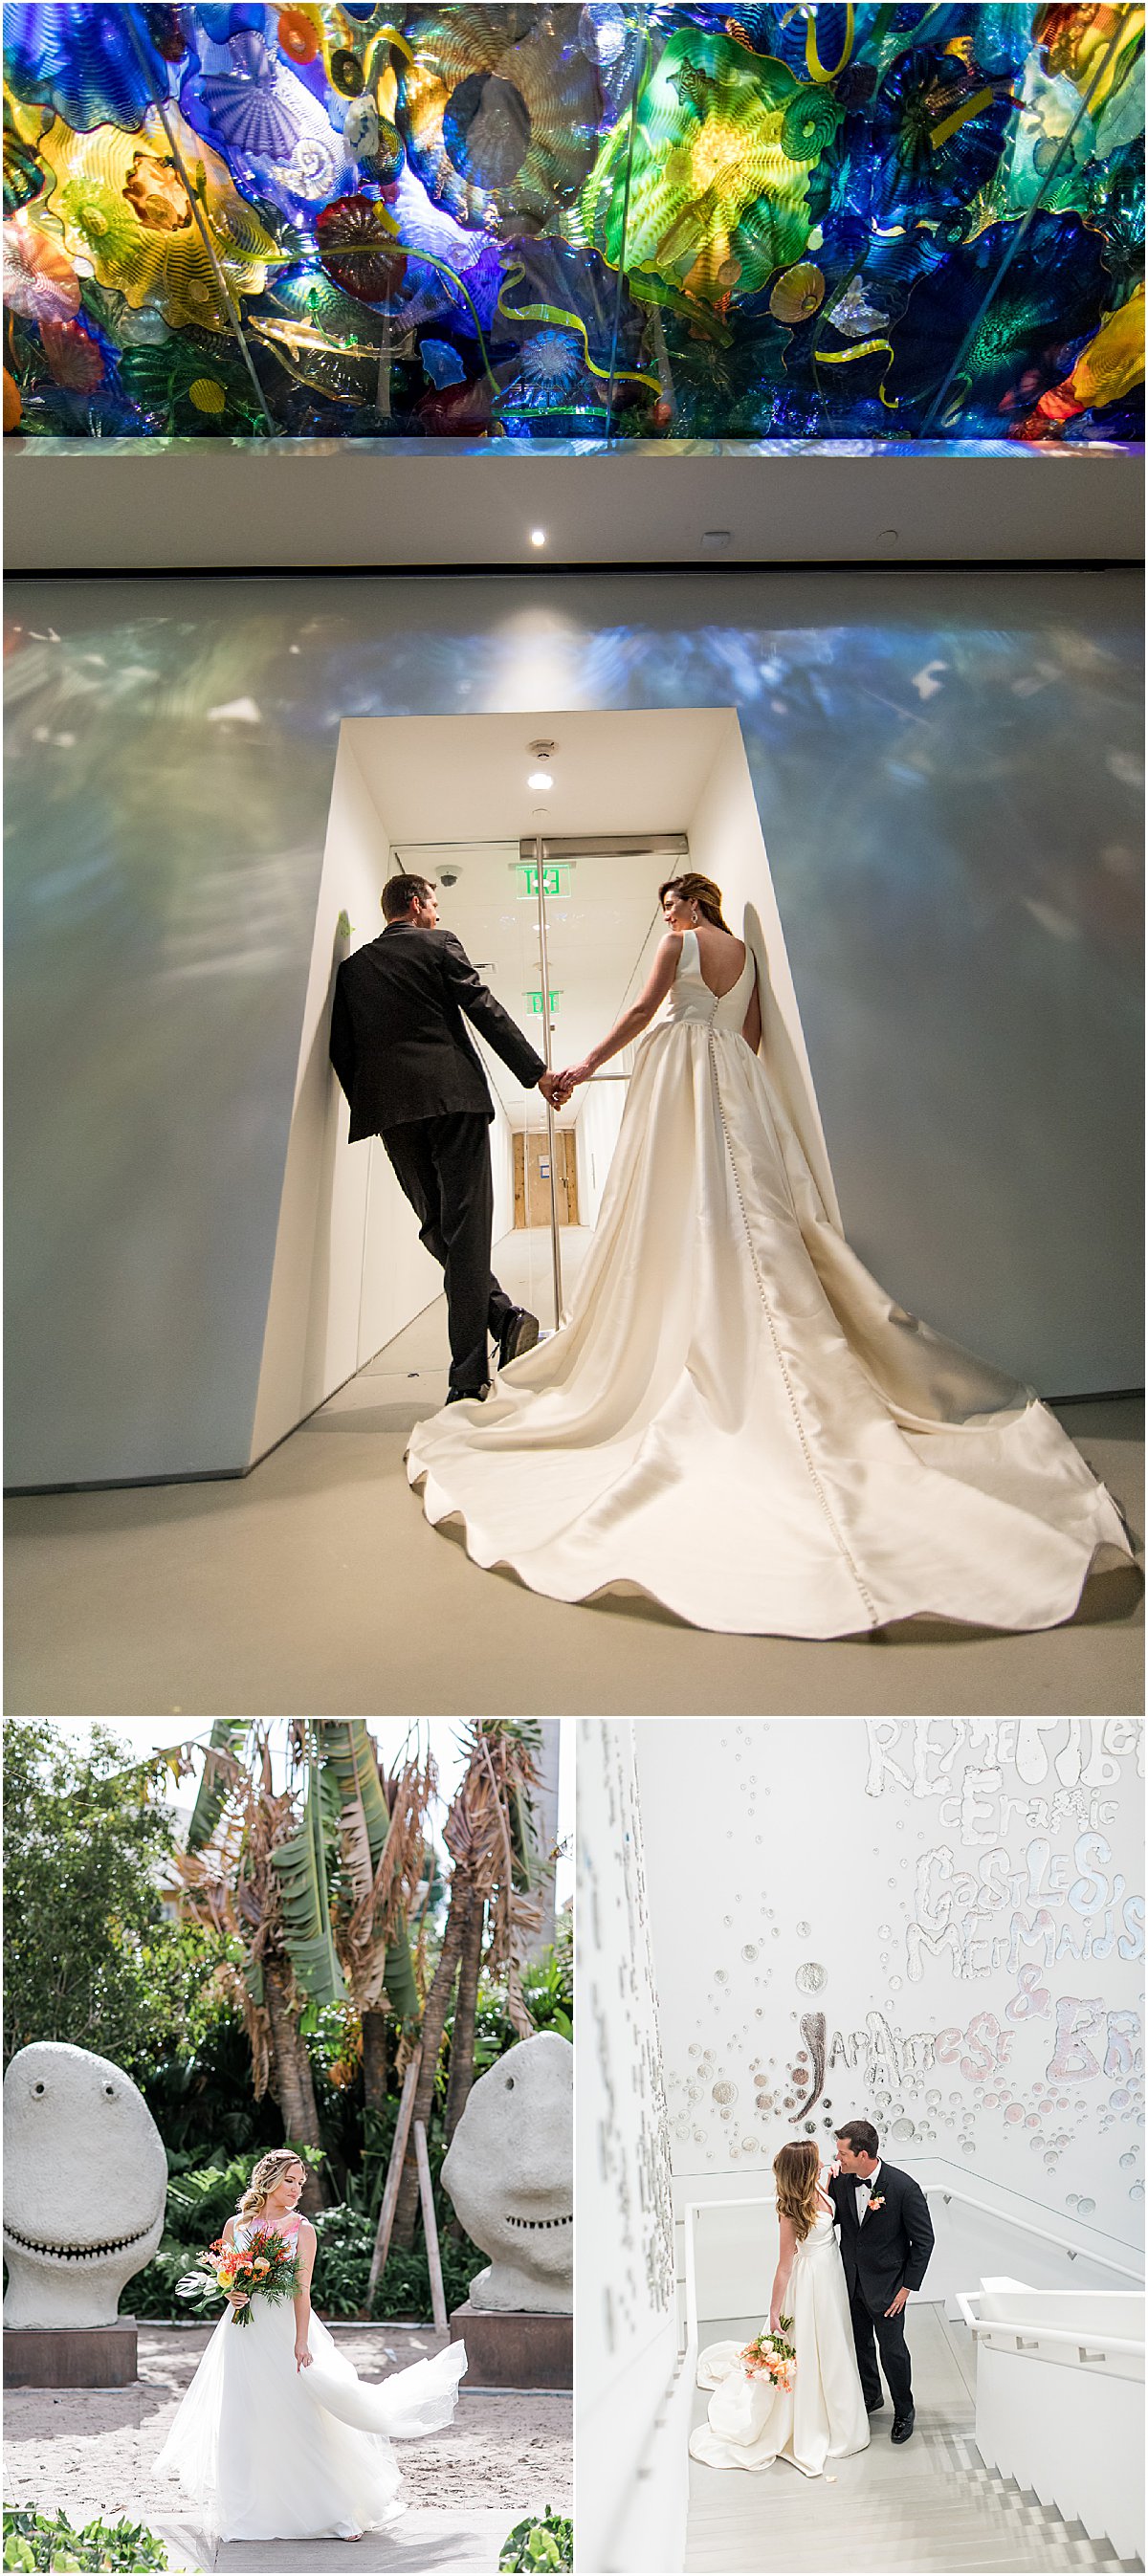 Norton Museum of Art Wedding | West Palm Beach | Married in Palm Beach | www.marriedinpalmbeach.com | Blink & Co Photography and Sara Kauss Photography